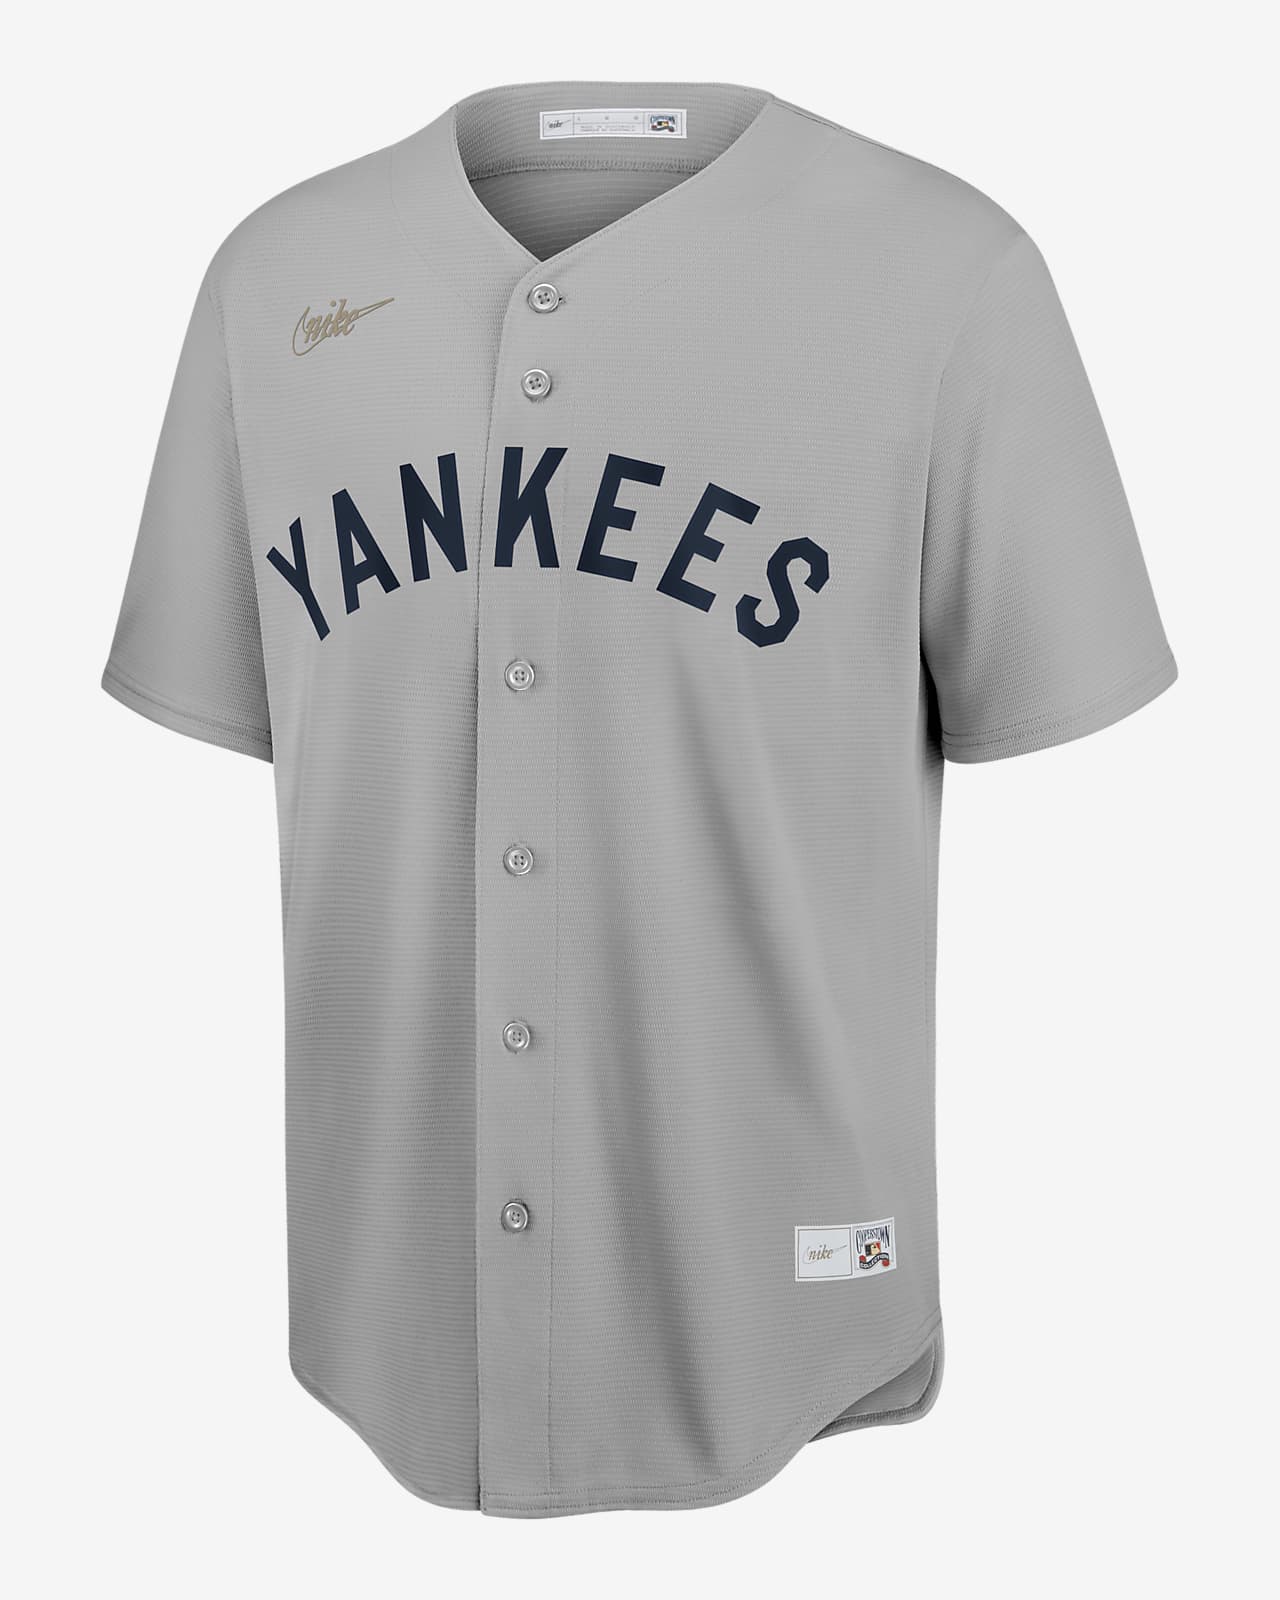 Camiseta de béisbol Cooperstown para hombre MLB New York Yankees.